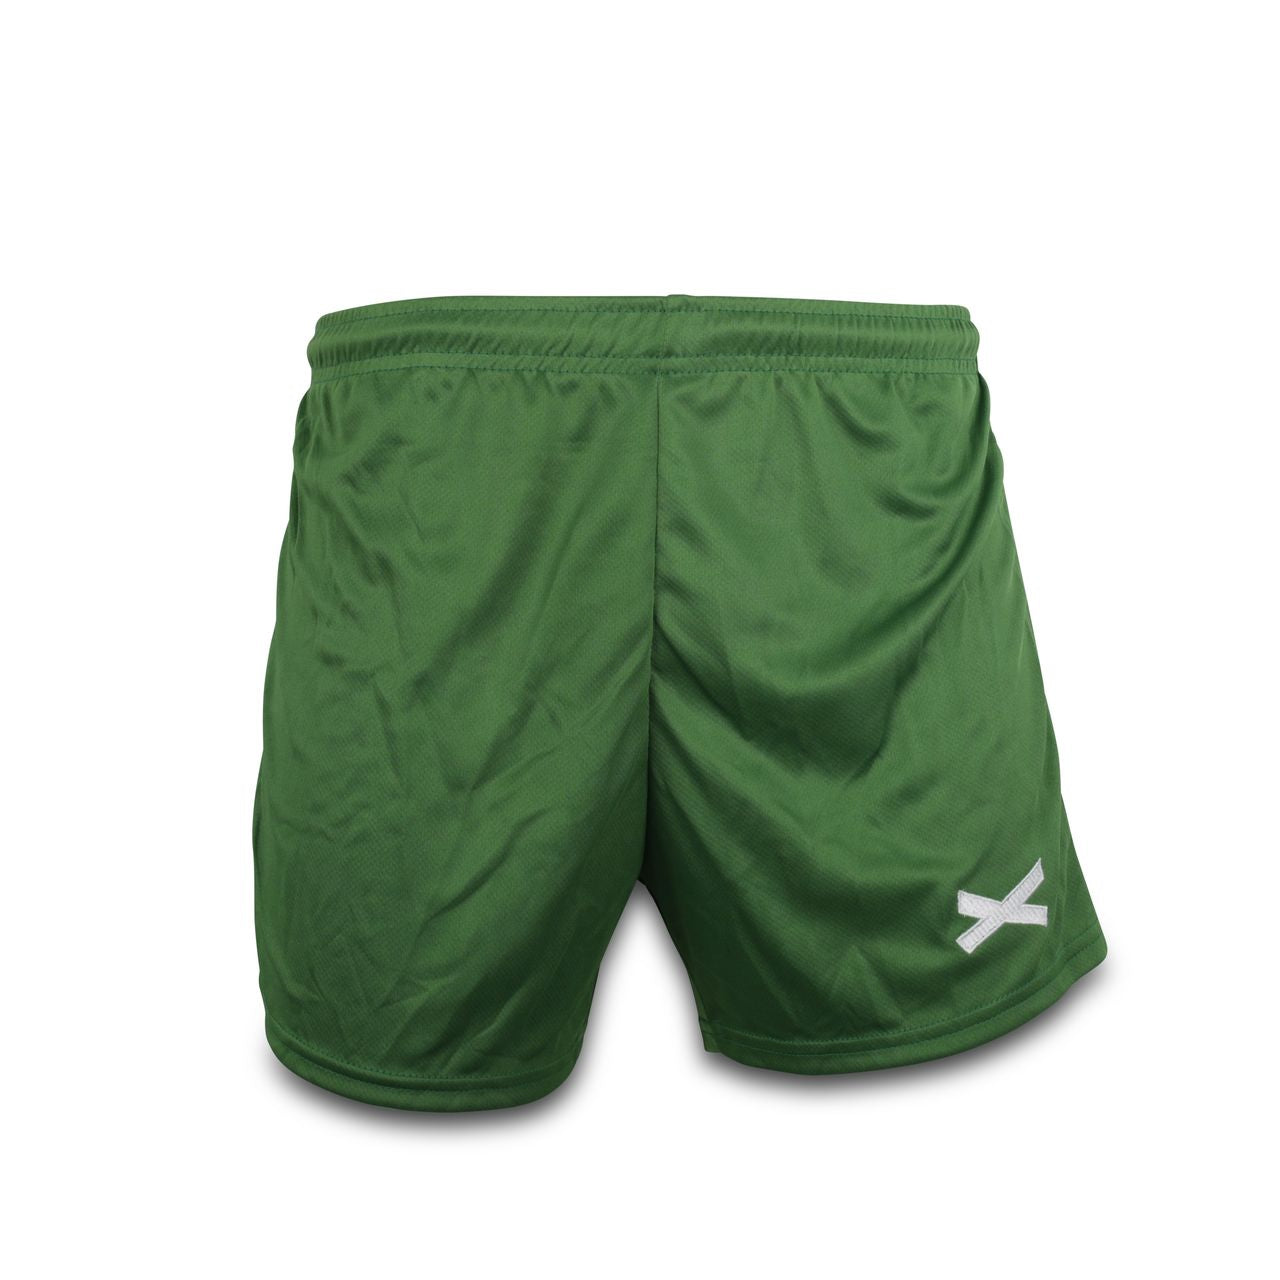 GAA Shorts Green with White Stripes Gaelic Games Sportswear